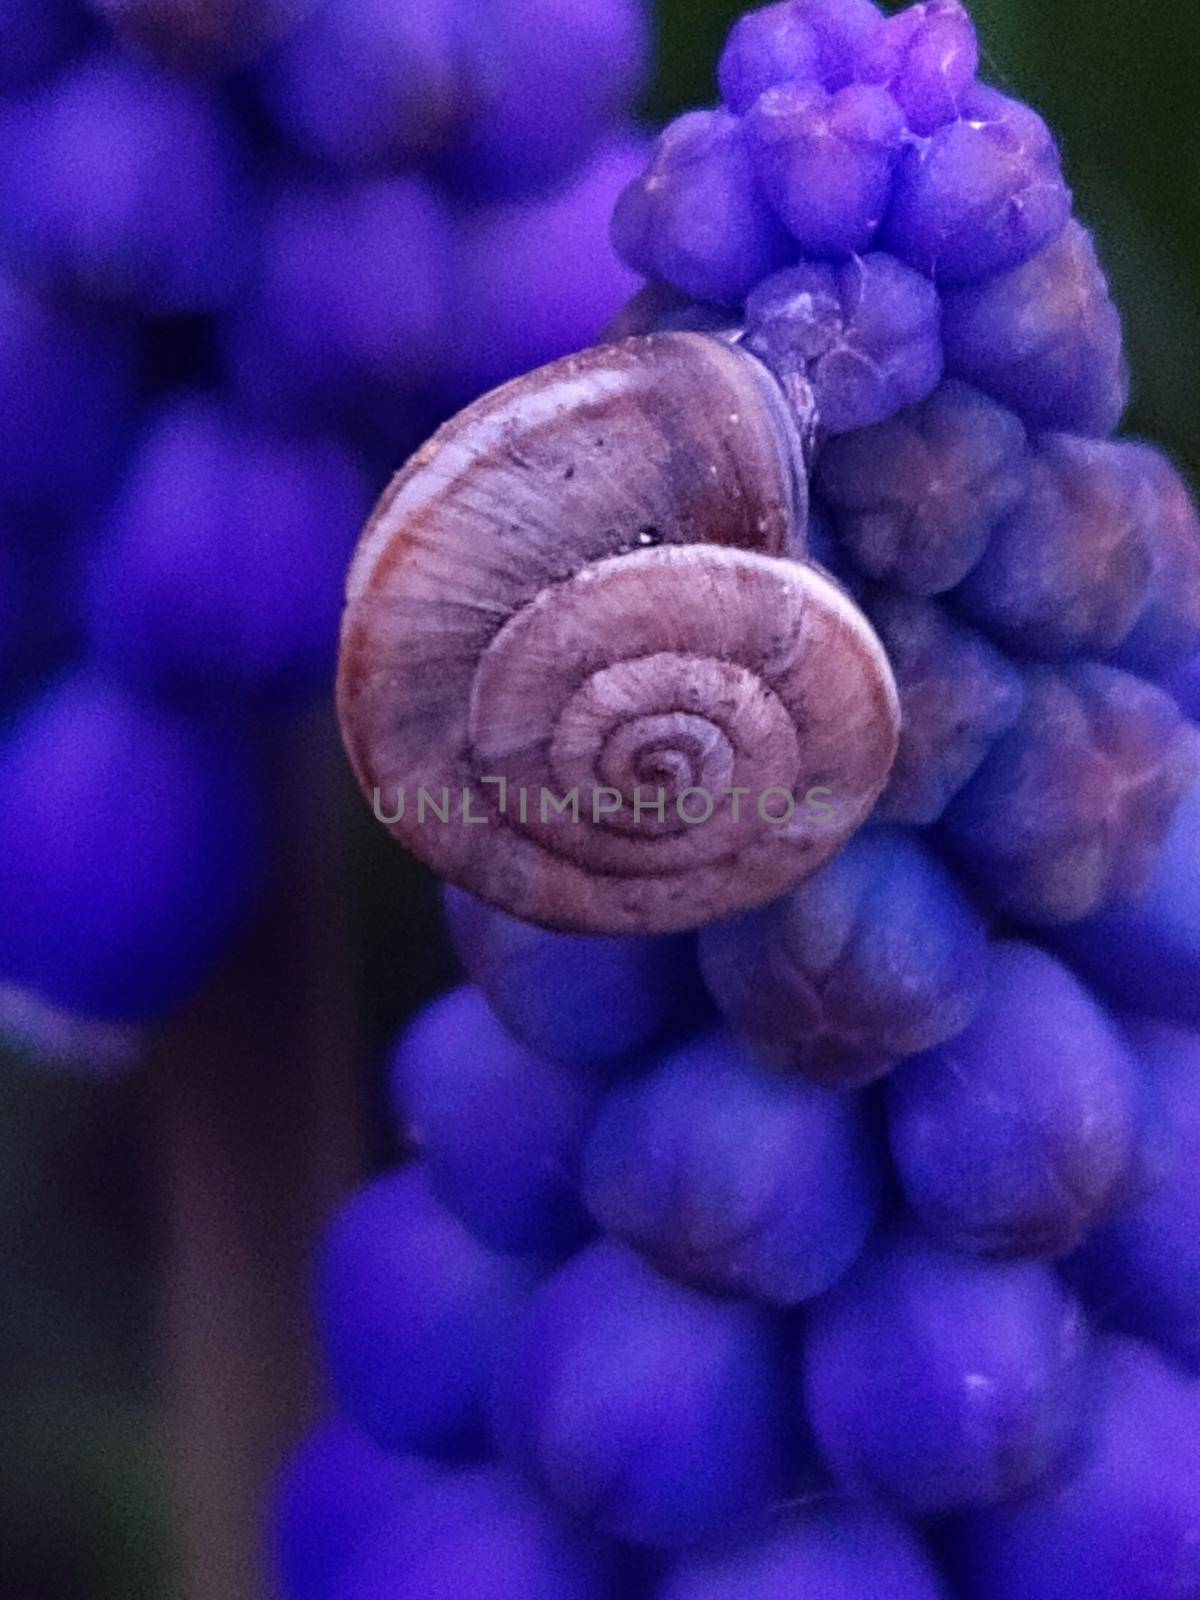 Snail on Armenian muscari flowers close up by Endusik